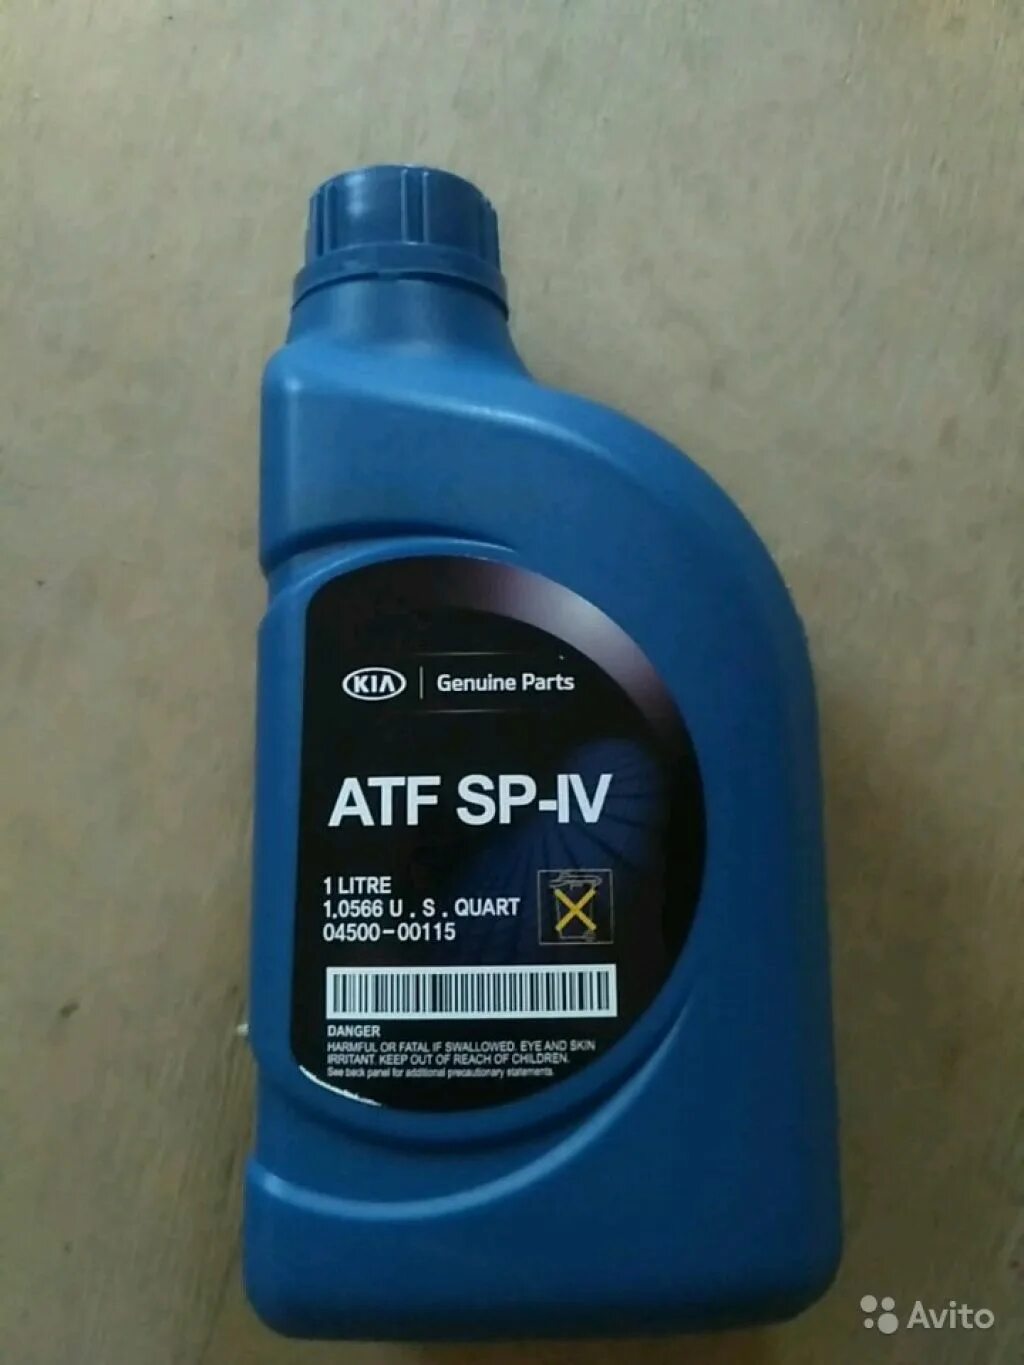 Atf sp 4 hyundai. ATF sp4 Kia. Kia ATF SP-IV. ATF SP 4 Kia 4 литра. ATF SP-IV M-1.